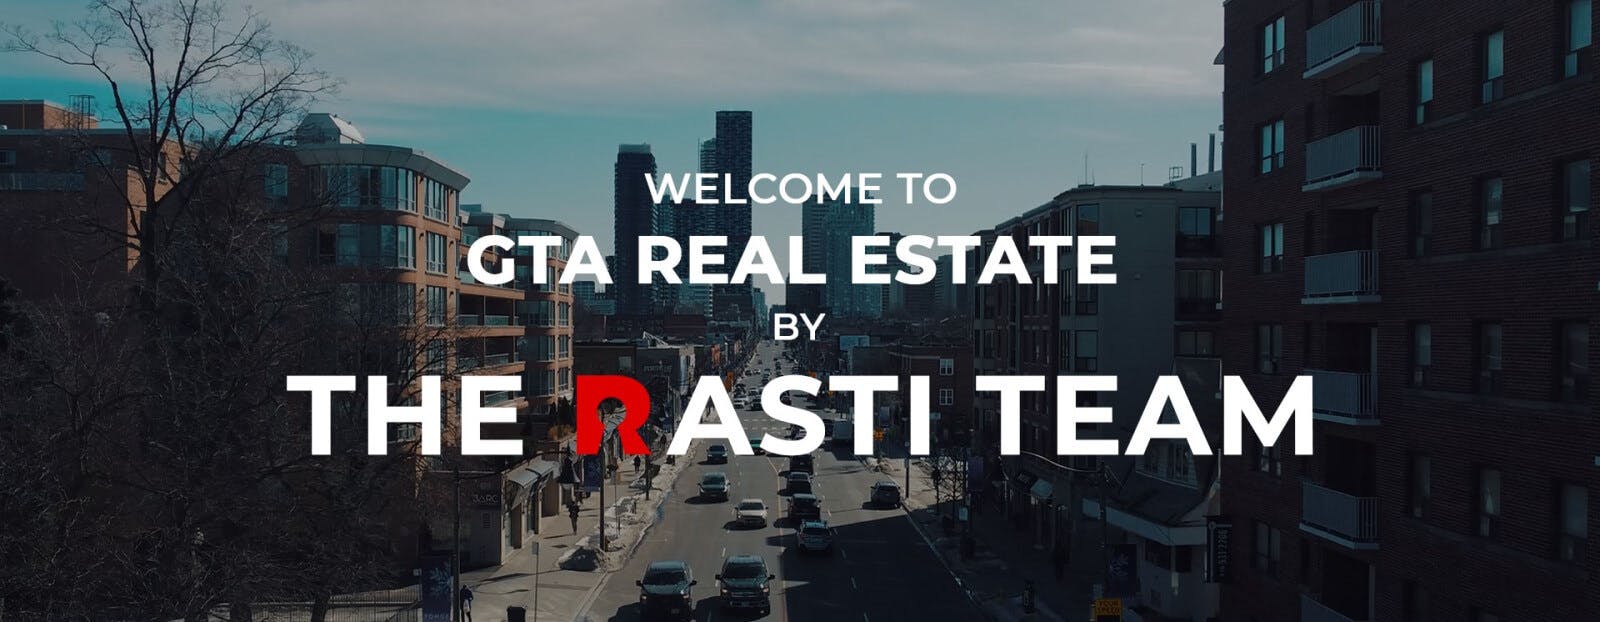 Mase Rasti Real Estate - North Toronto Realtor